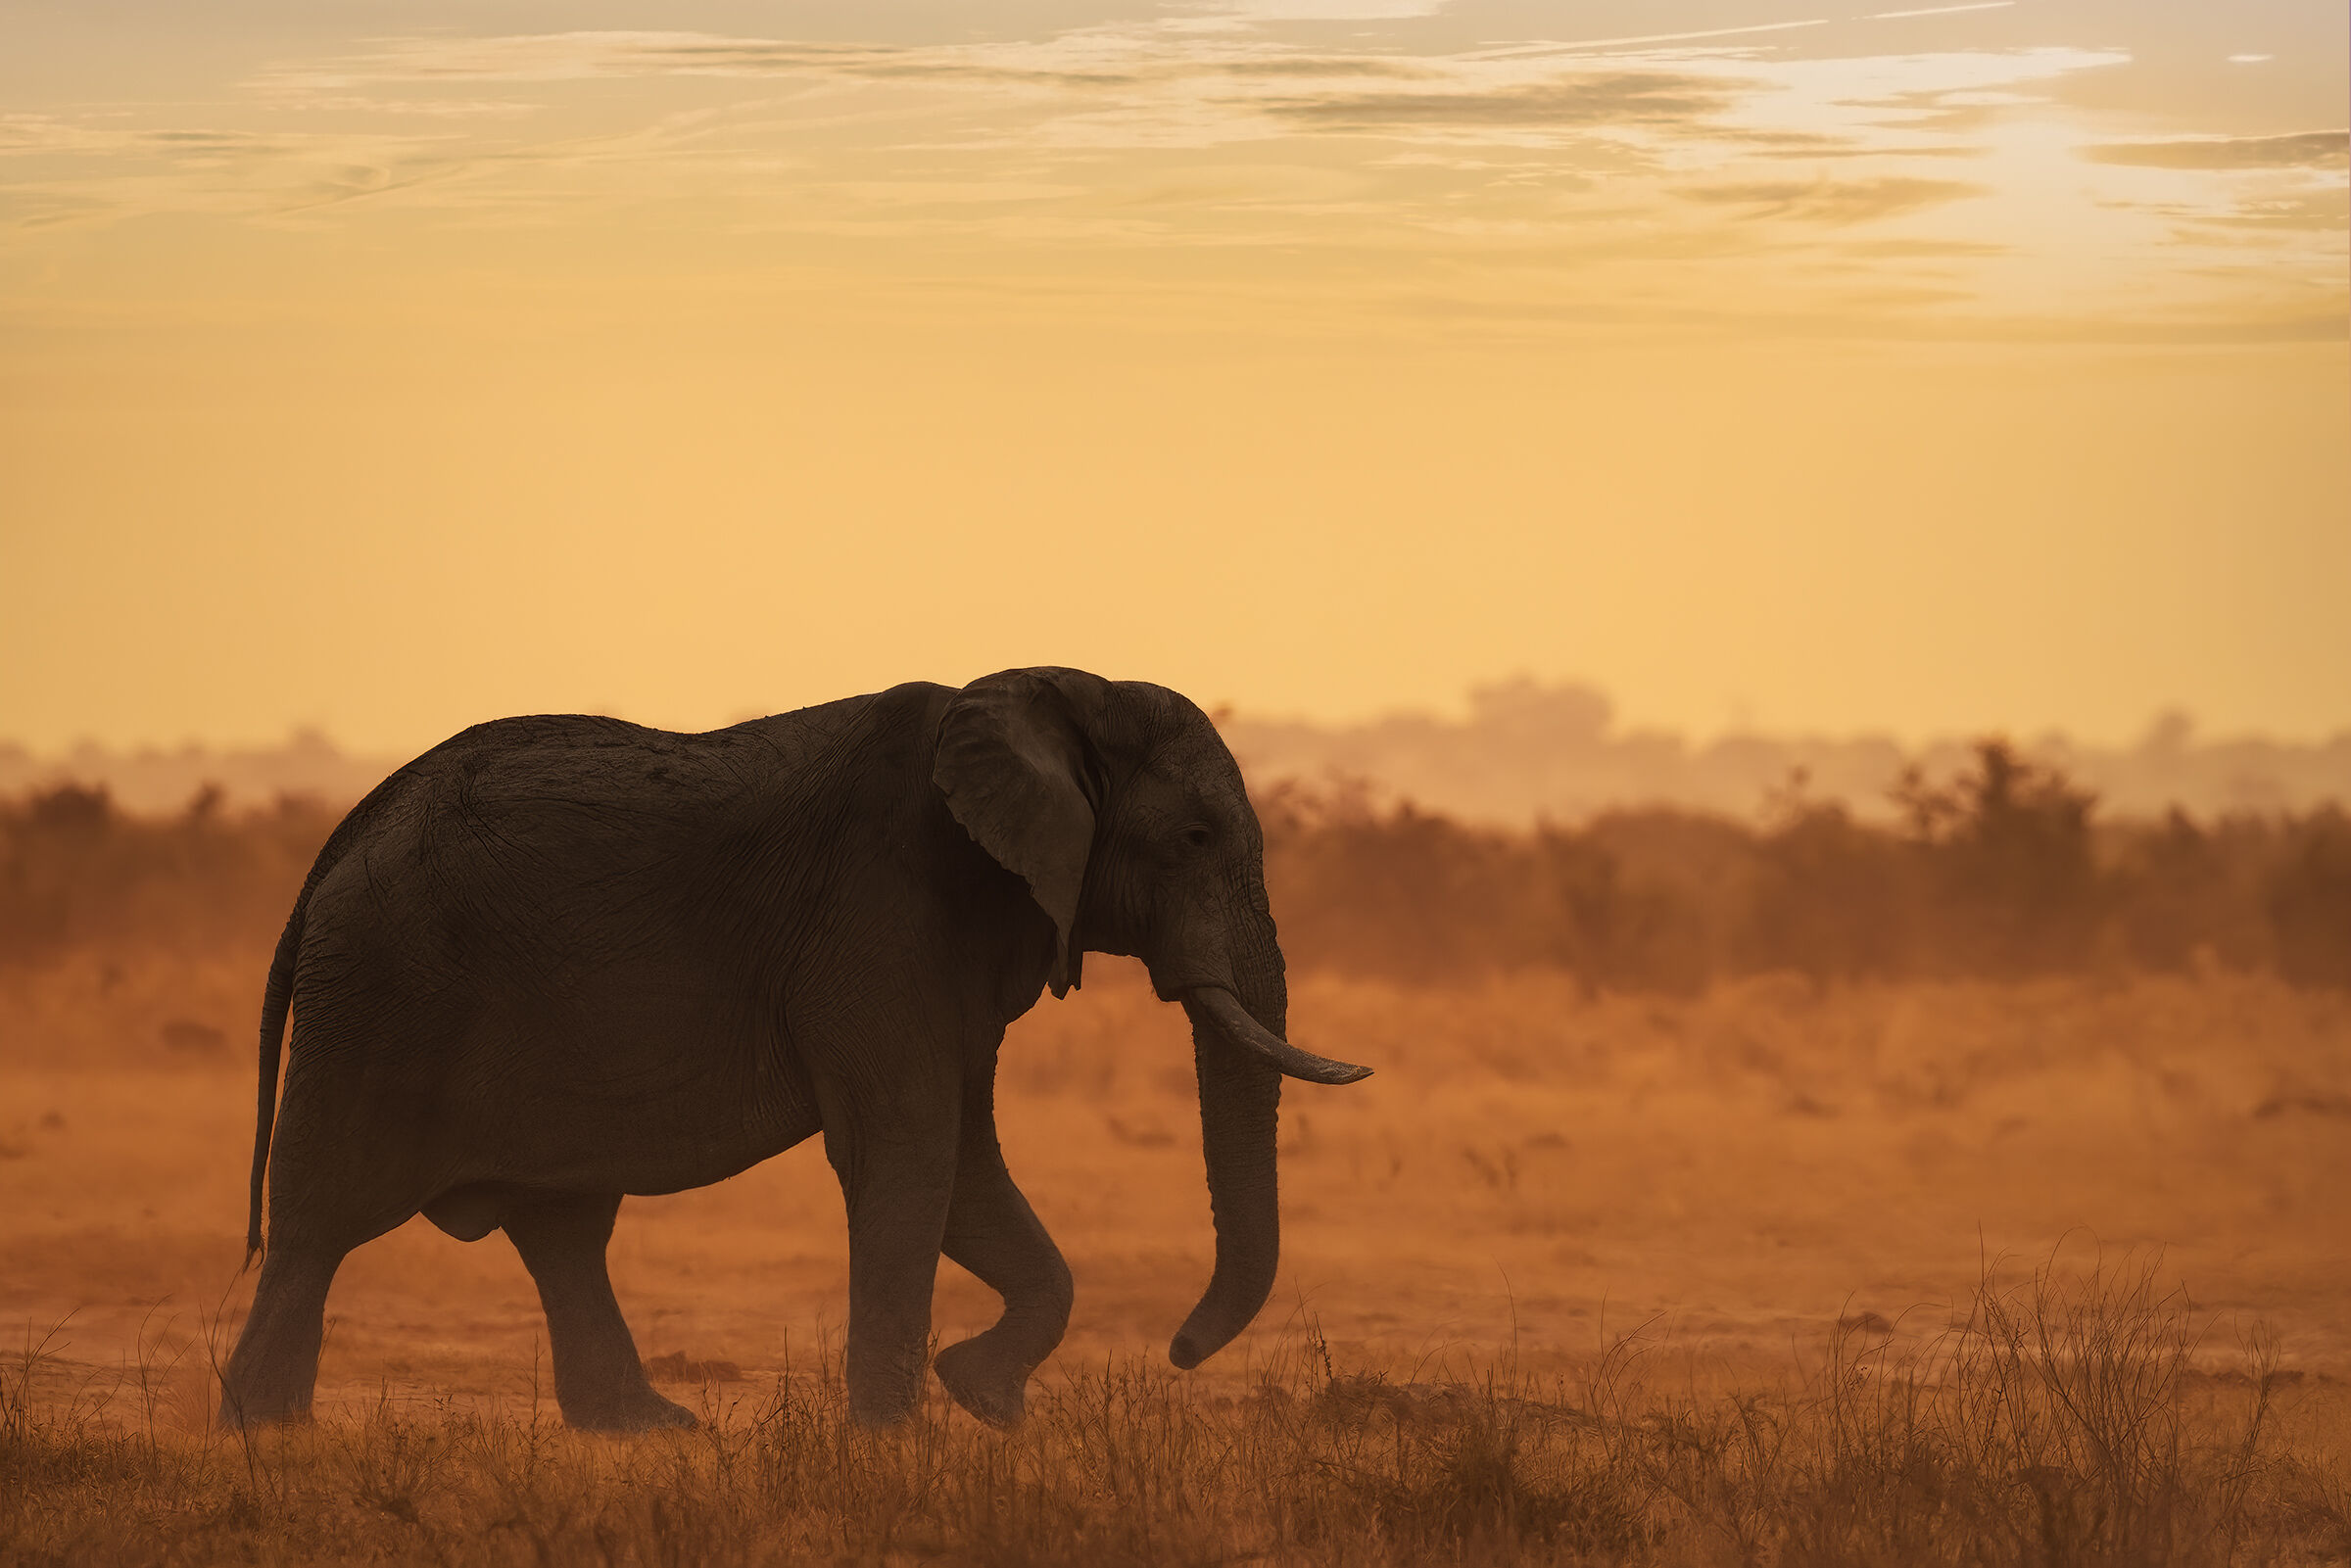 The Elephant's Sunset...